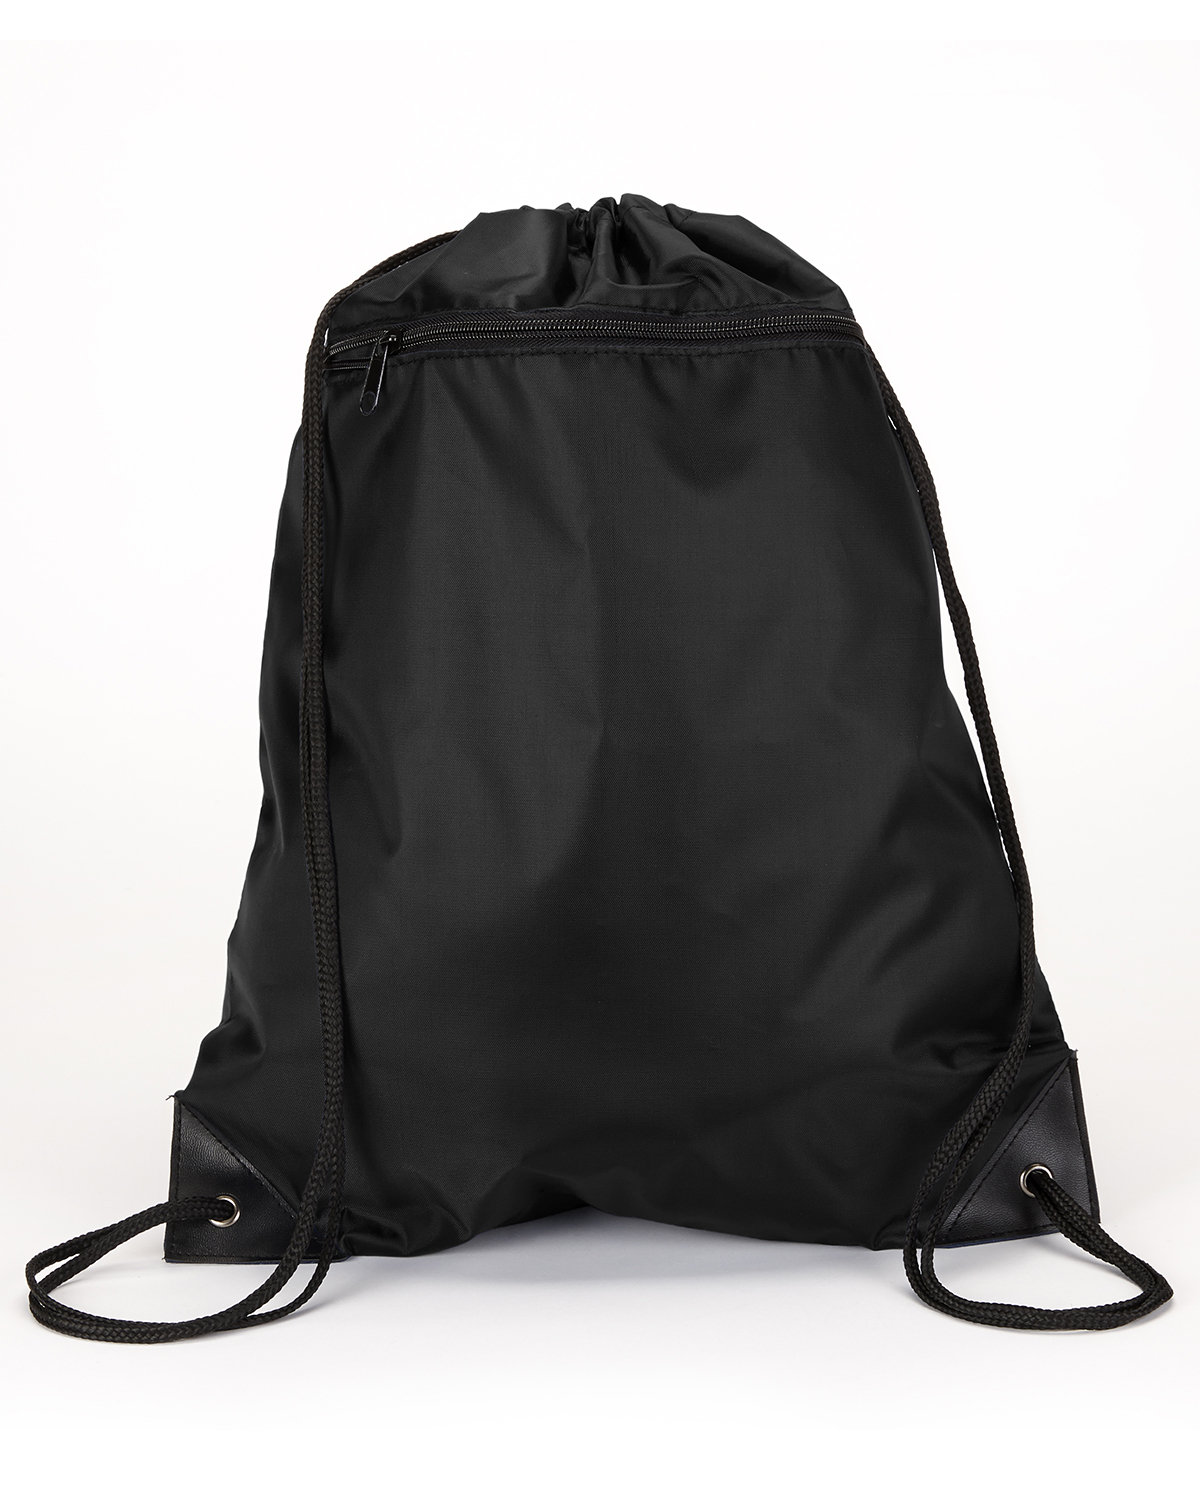 K001 8888 Zipper Drawstring backpack bag